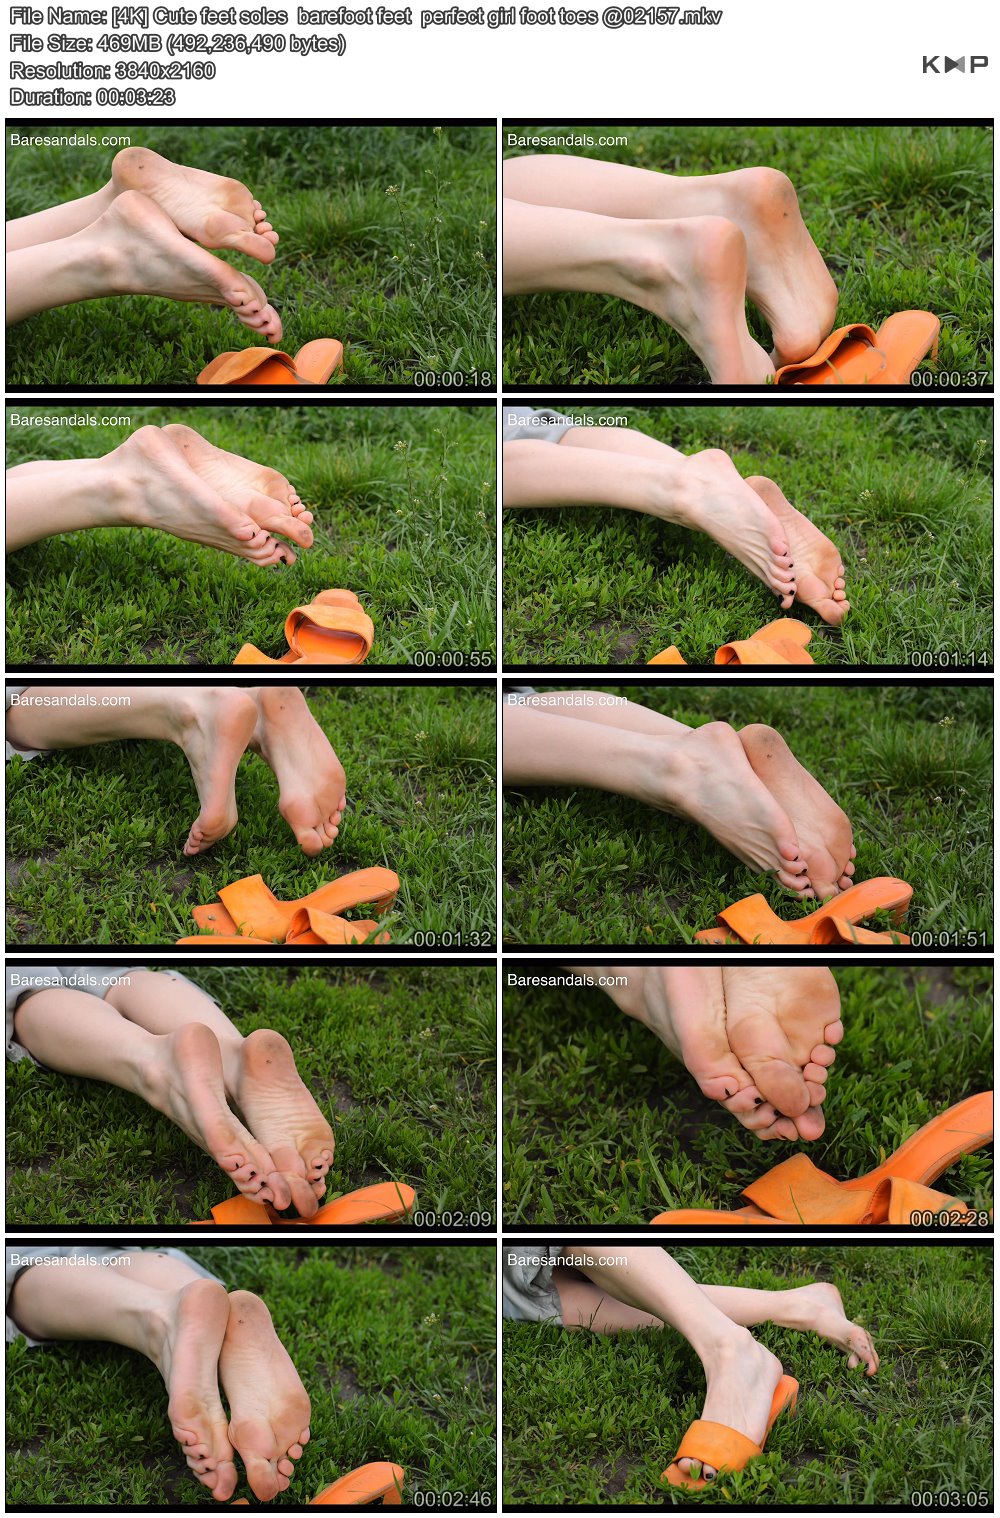 [4K] Cute feet soles  barefoot feet  perfect girl foot toes @02157.JPG